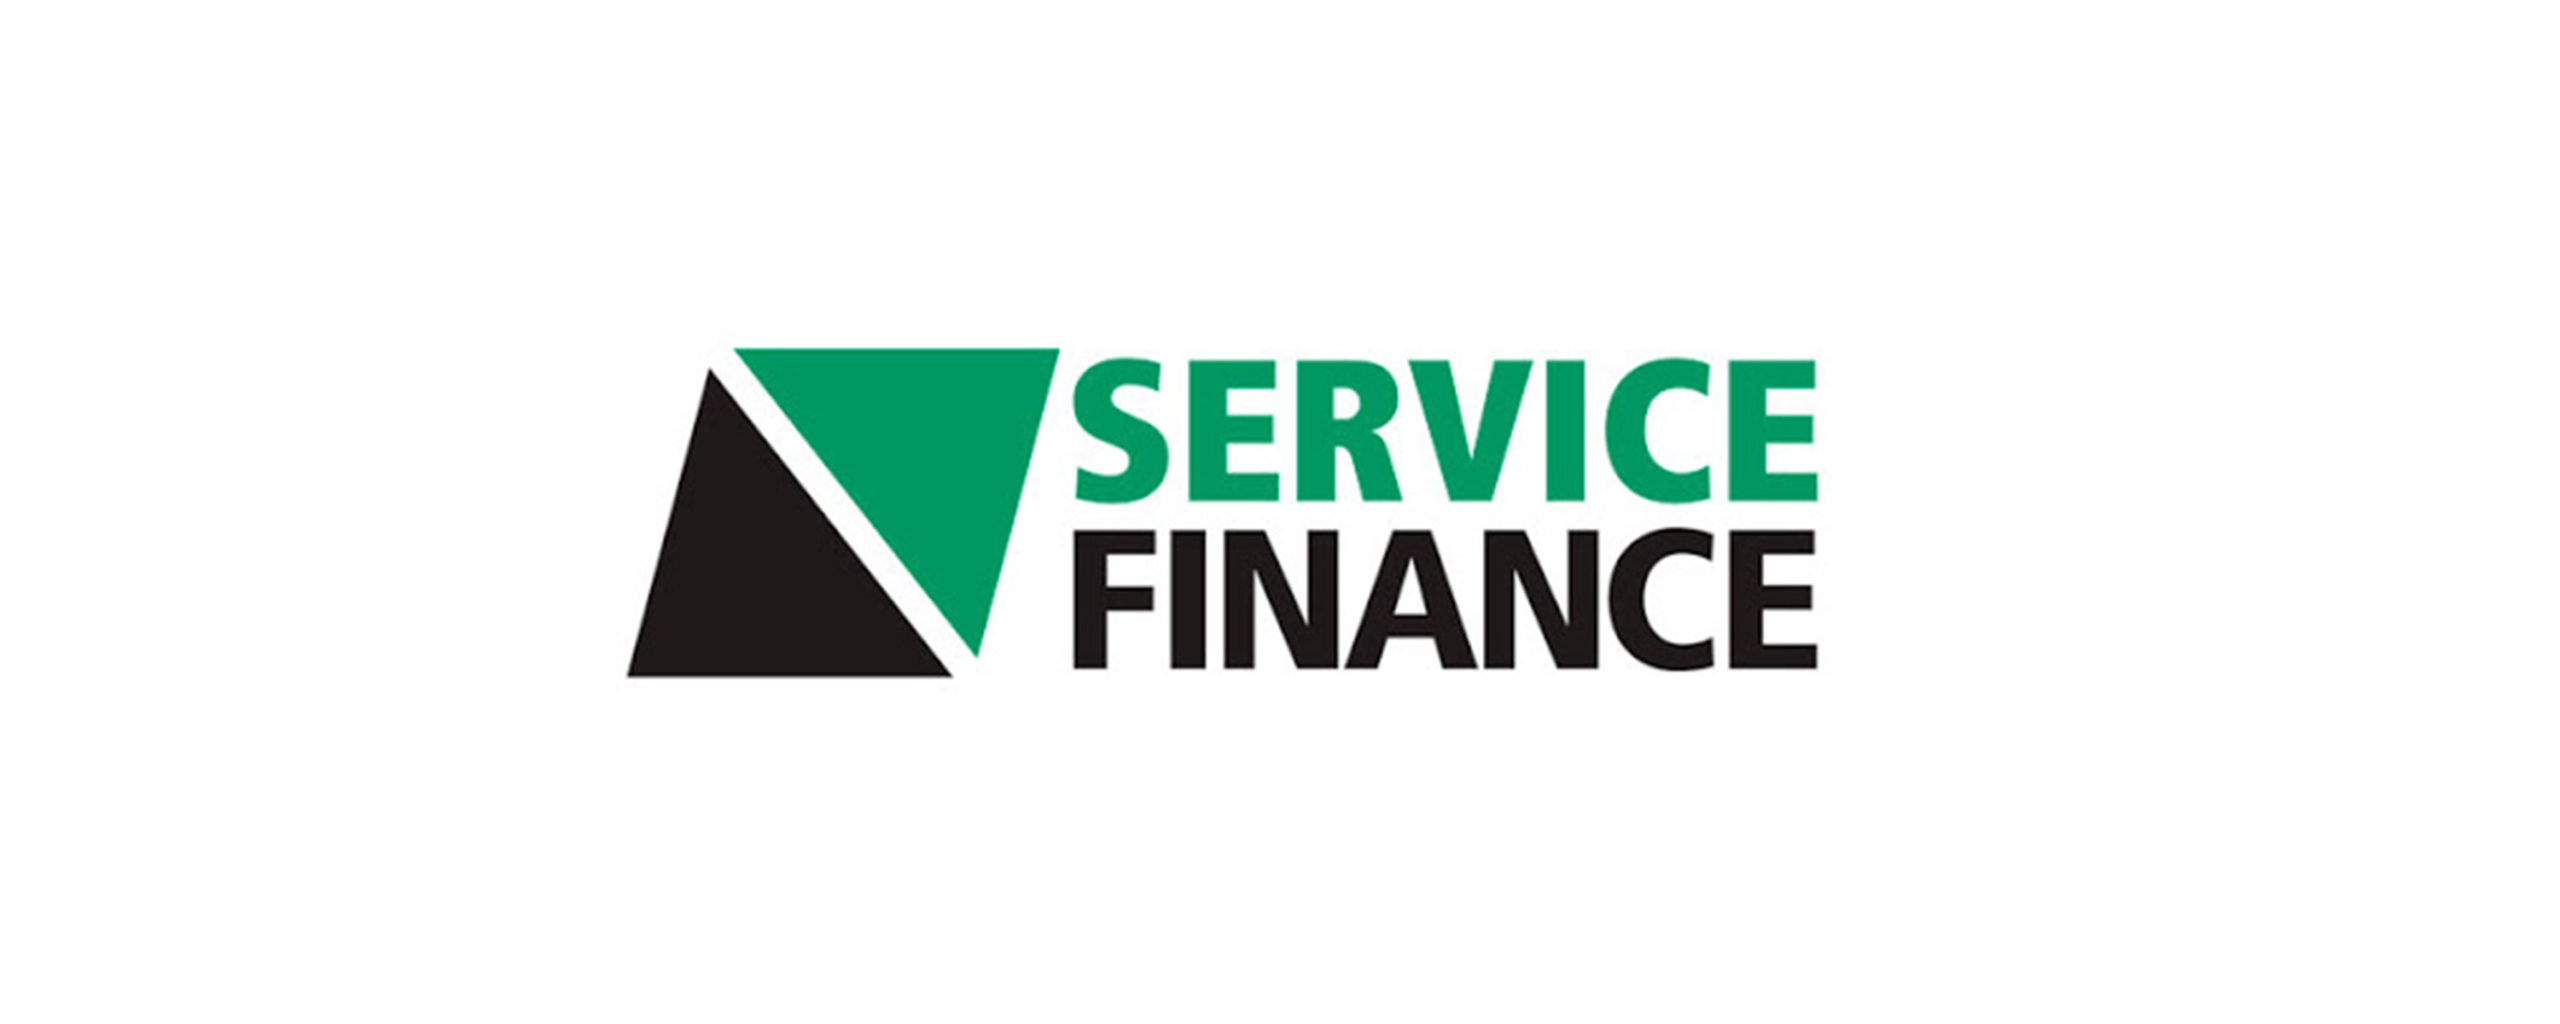 service-finance-logo-scaled